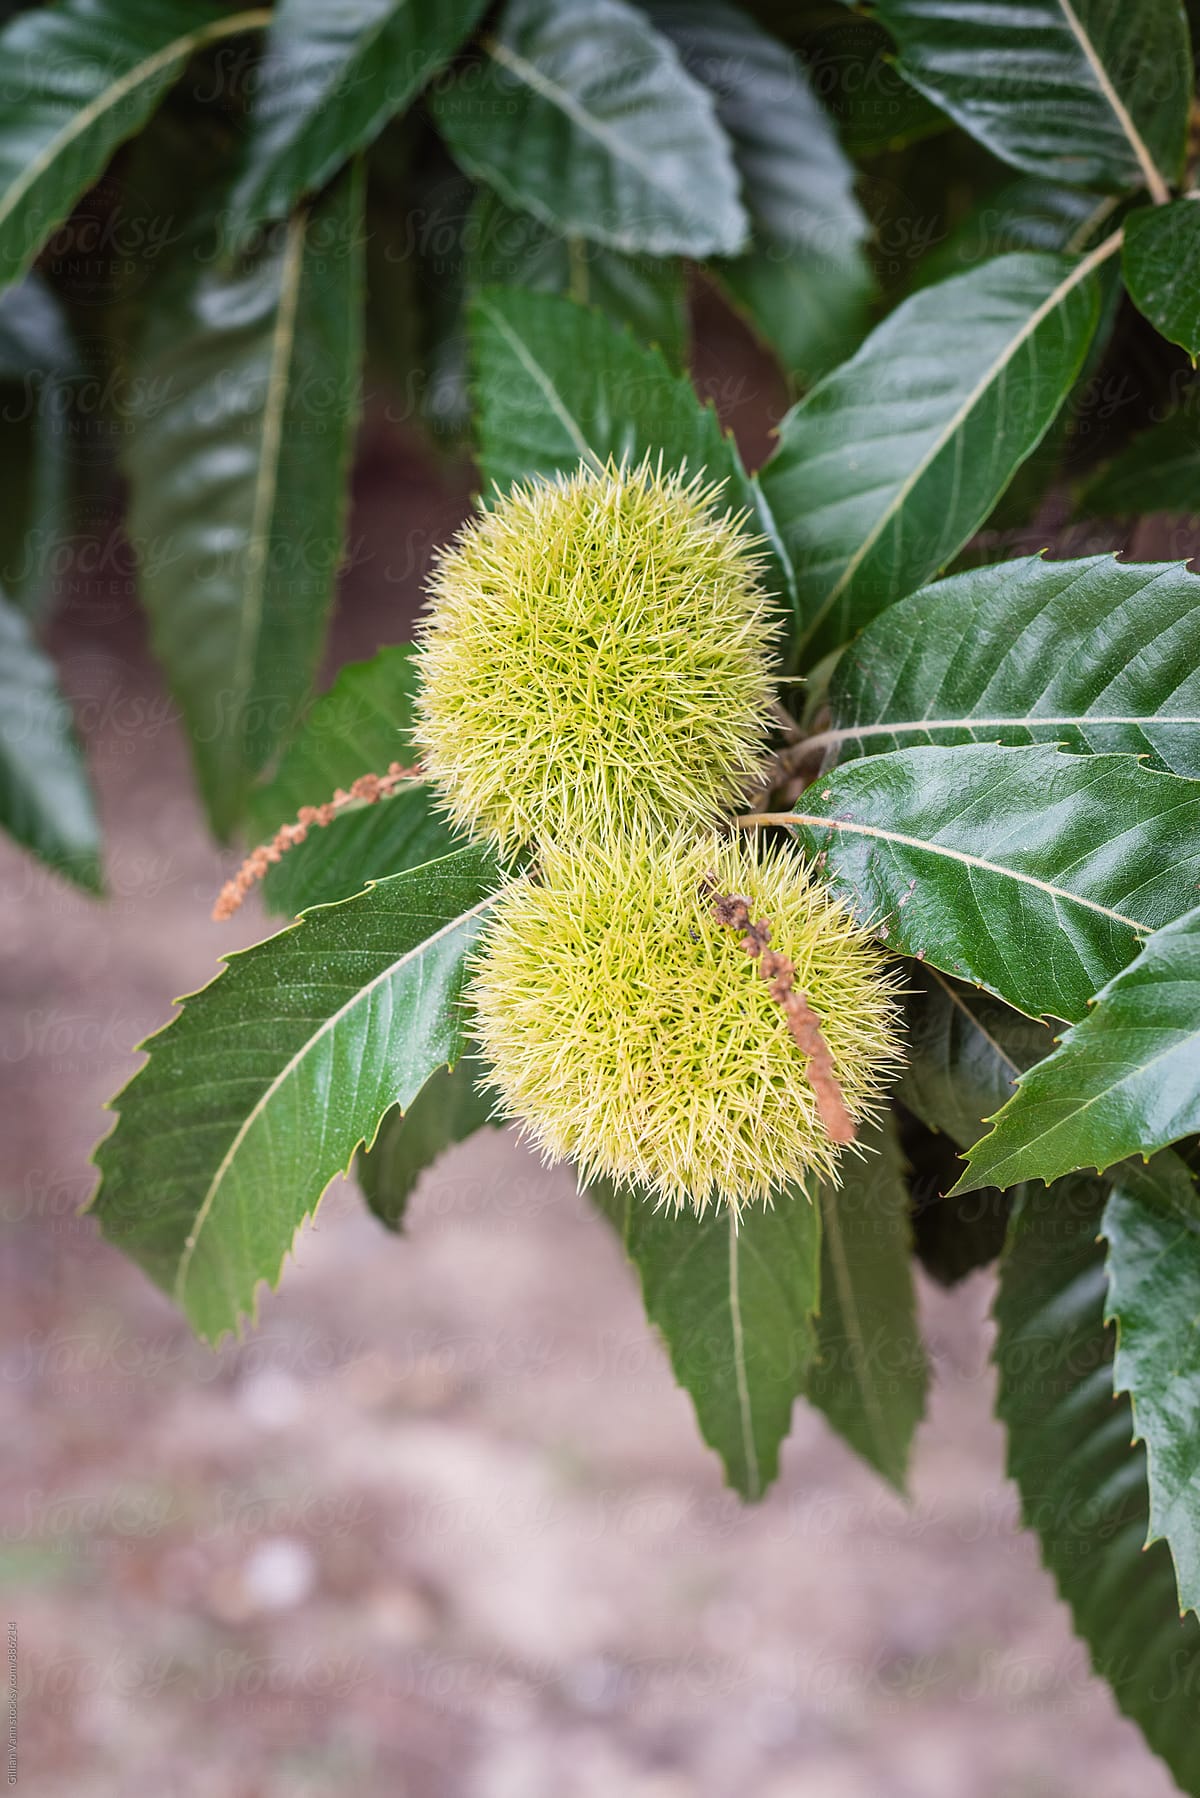 chestnut tree in fruit in summer (harvest in winter)